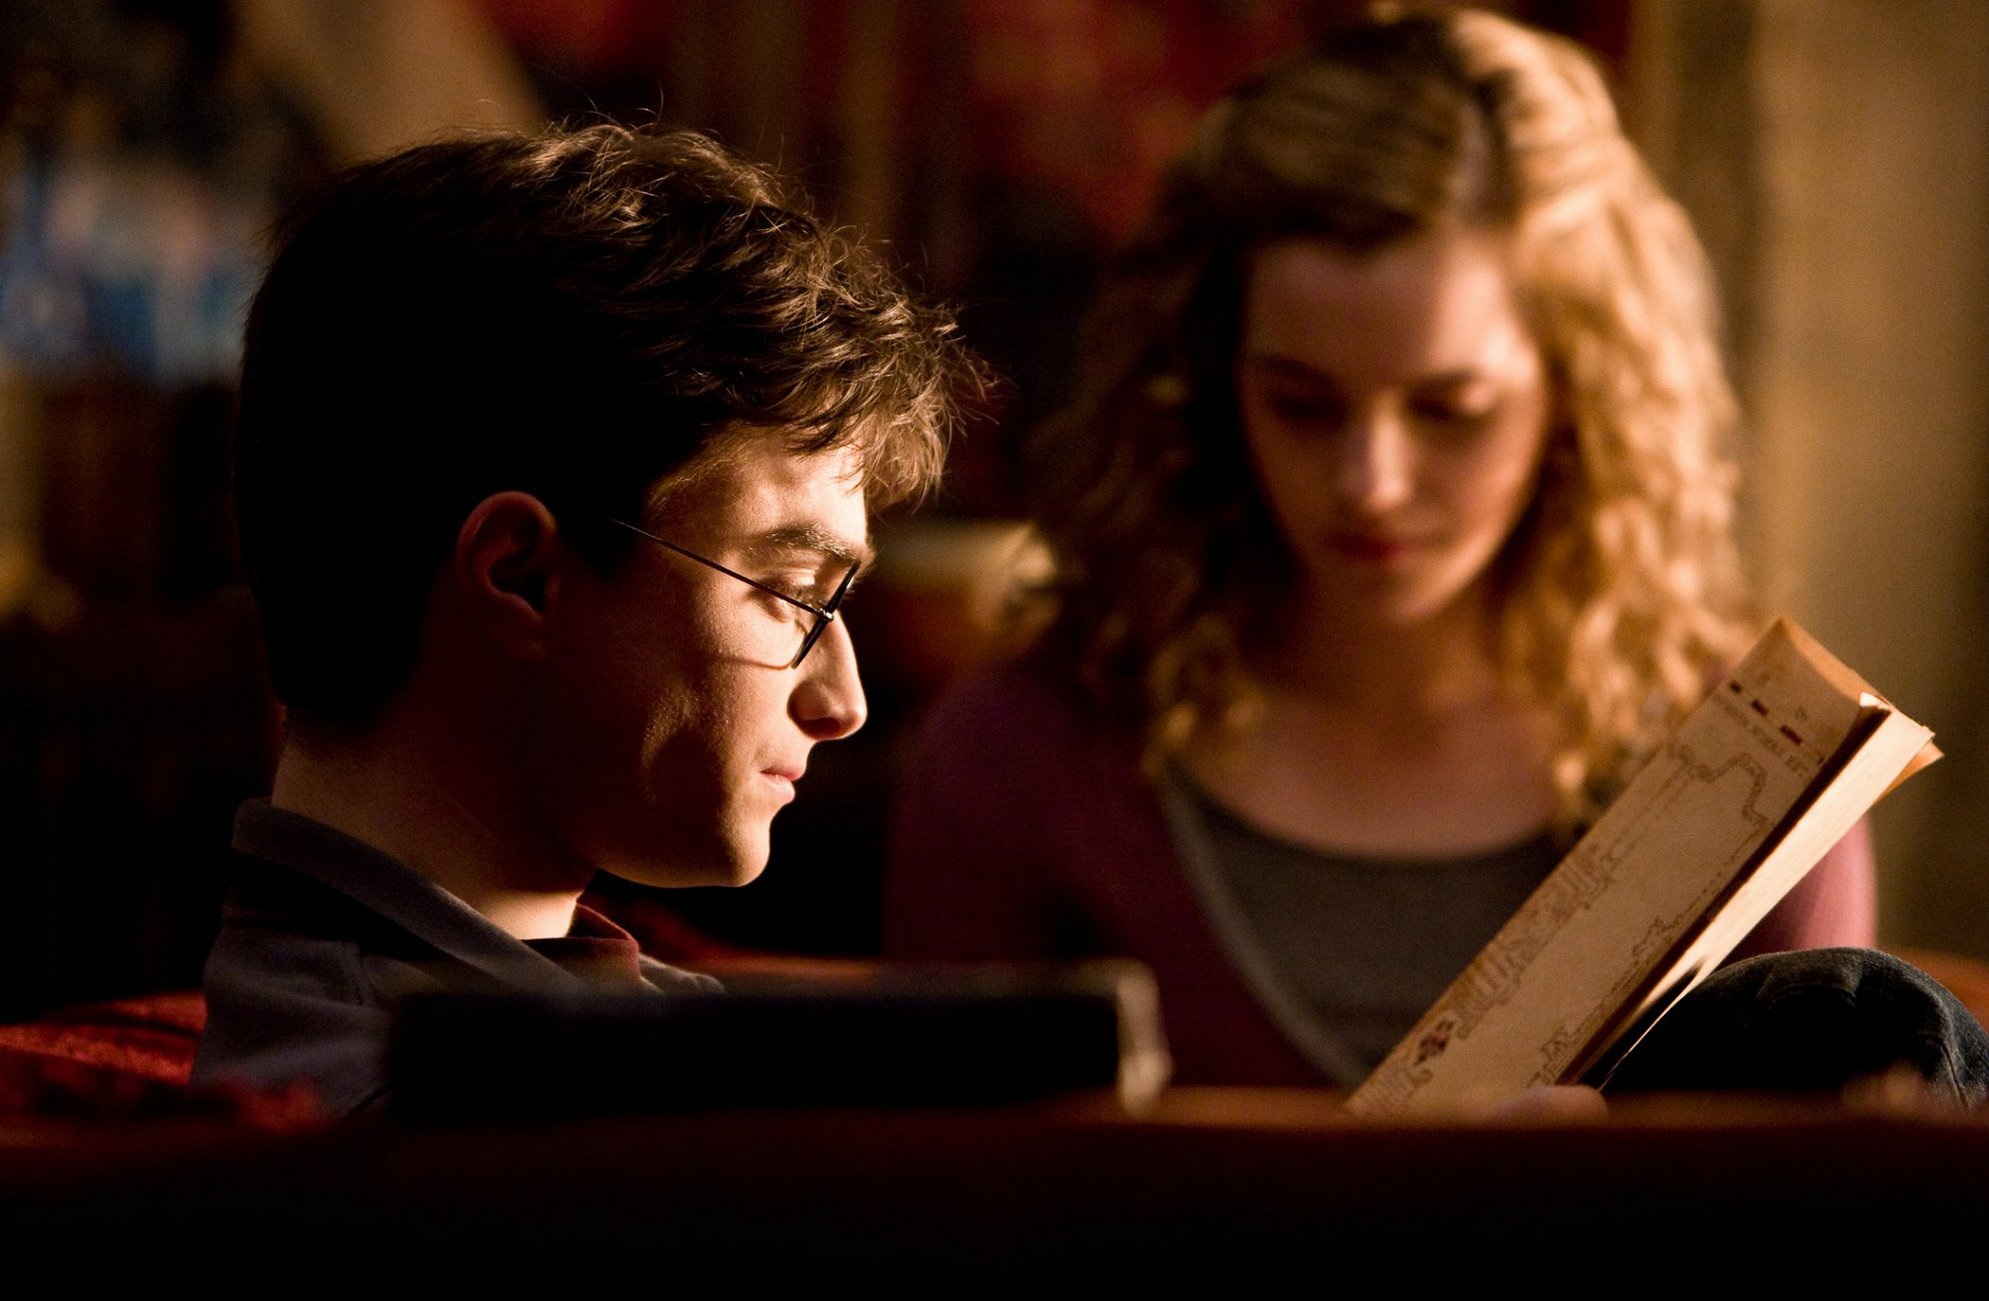 The movie was the book. Hermione Granger half Blood Prince. Гермиона Грейнджер принц полукровка.